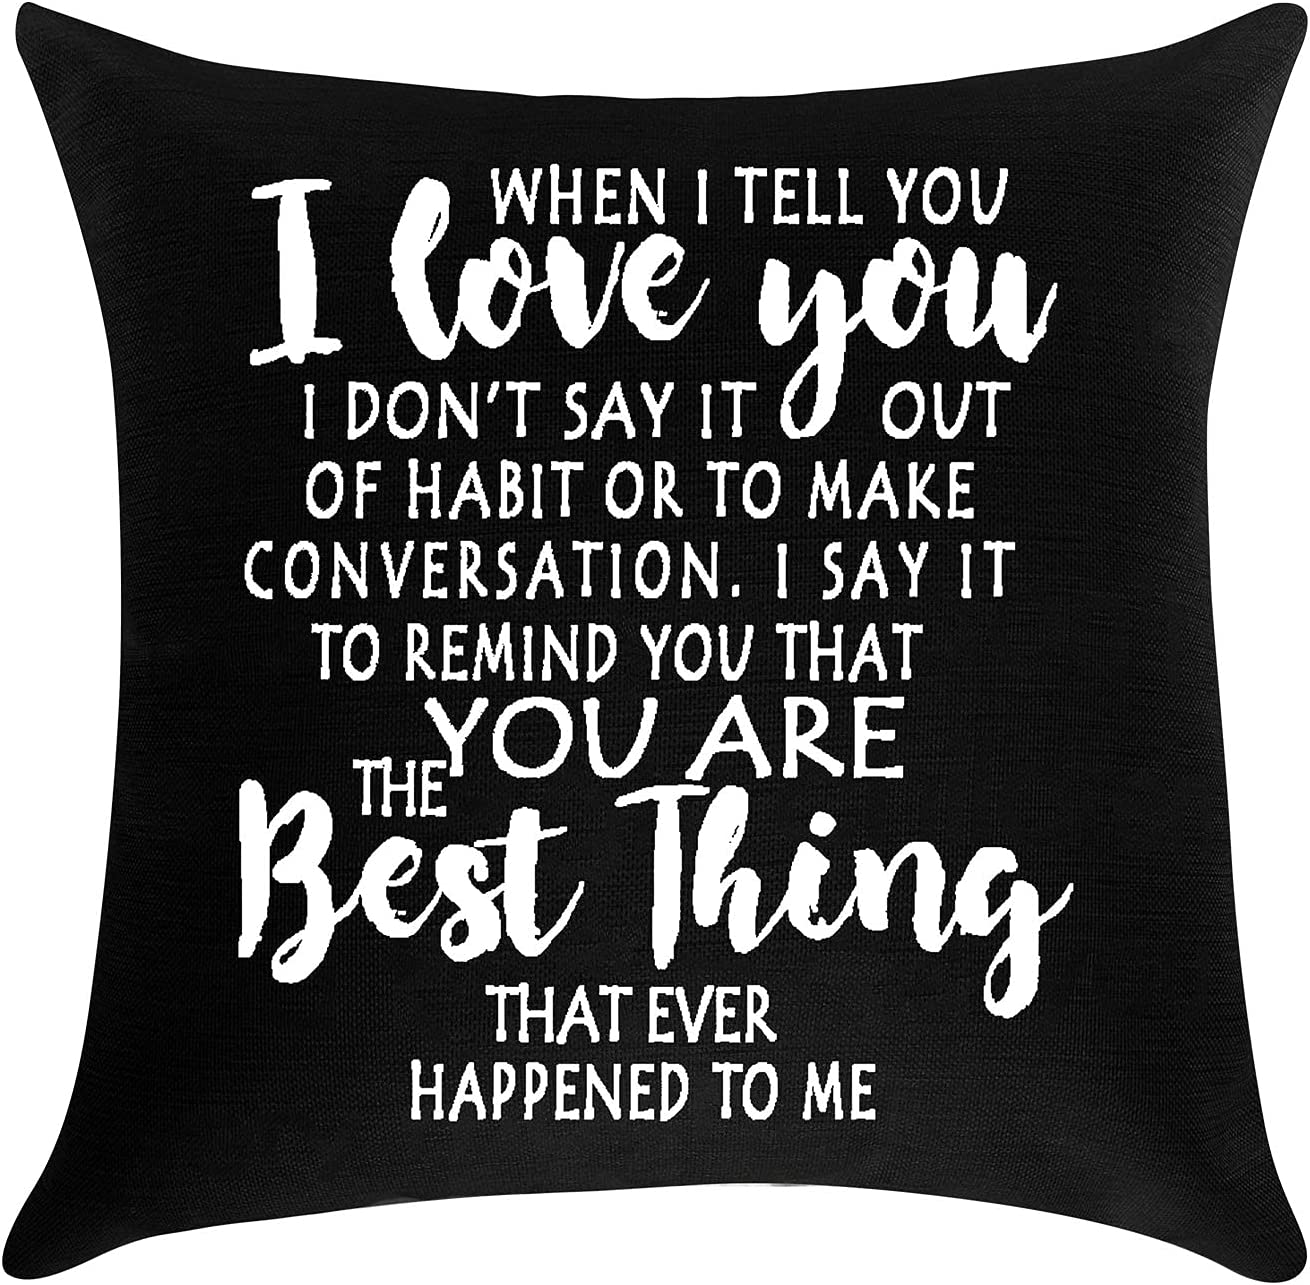 When I Tell You I Love You Pillow - Unique Pillows - Send A Hug